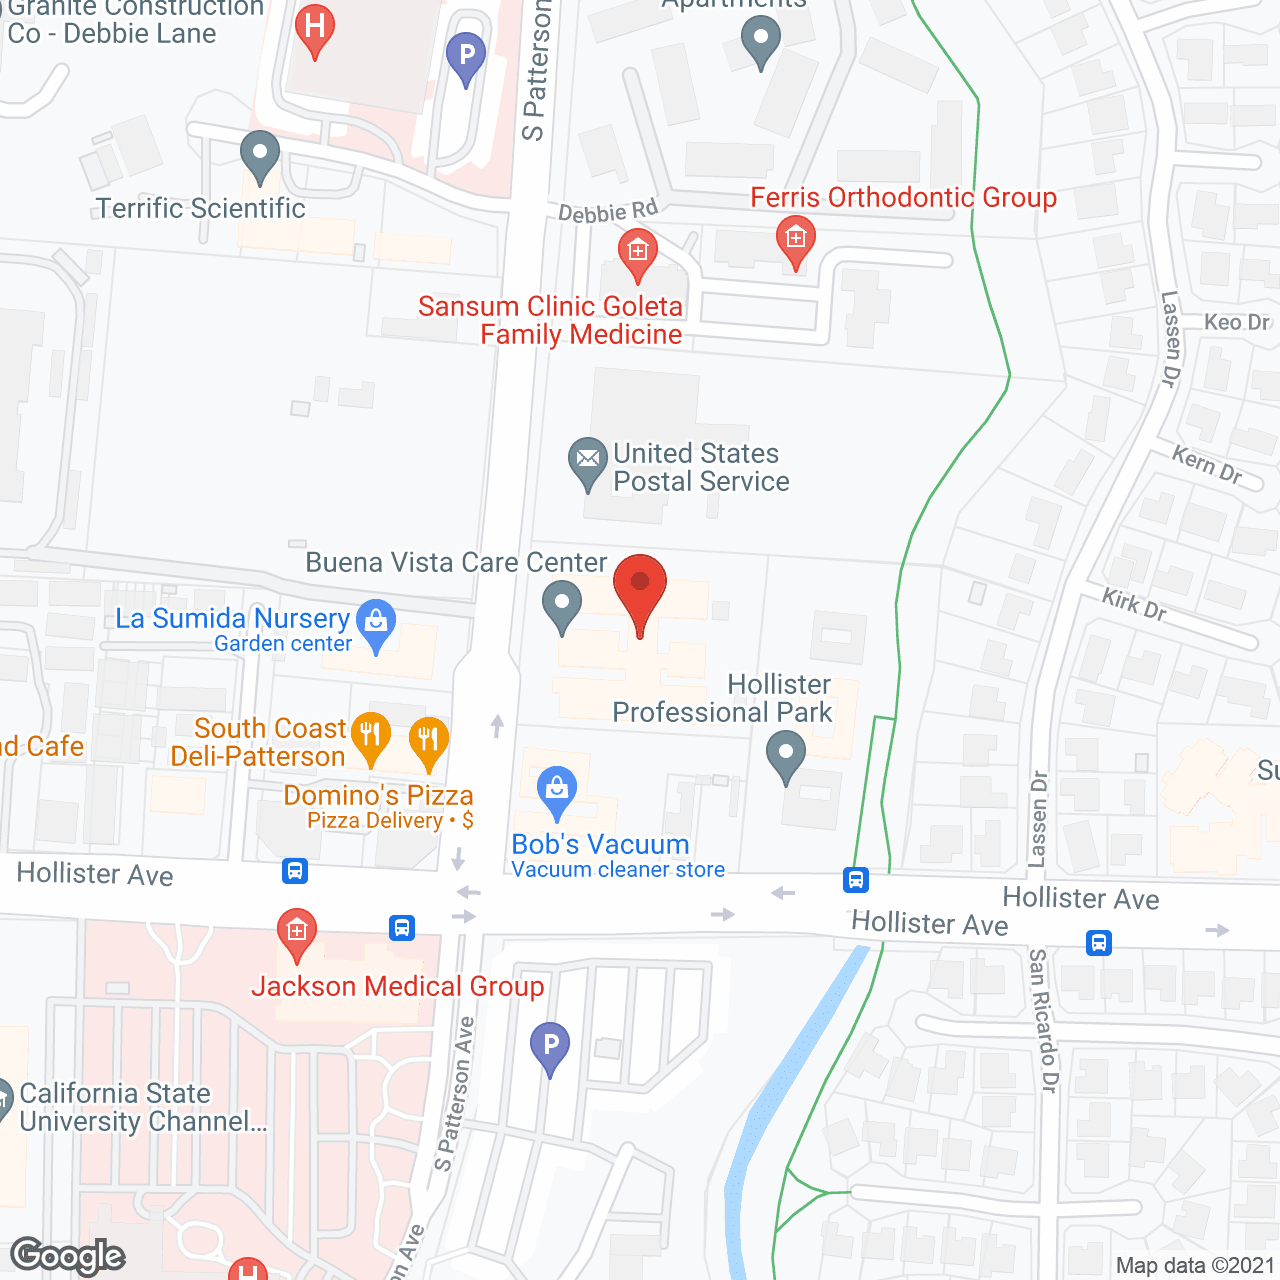 Buena Vista Care Center in google map